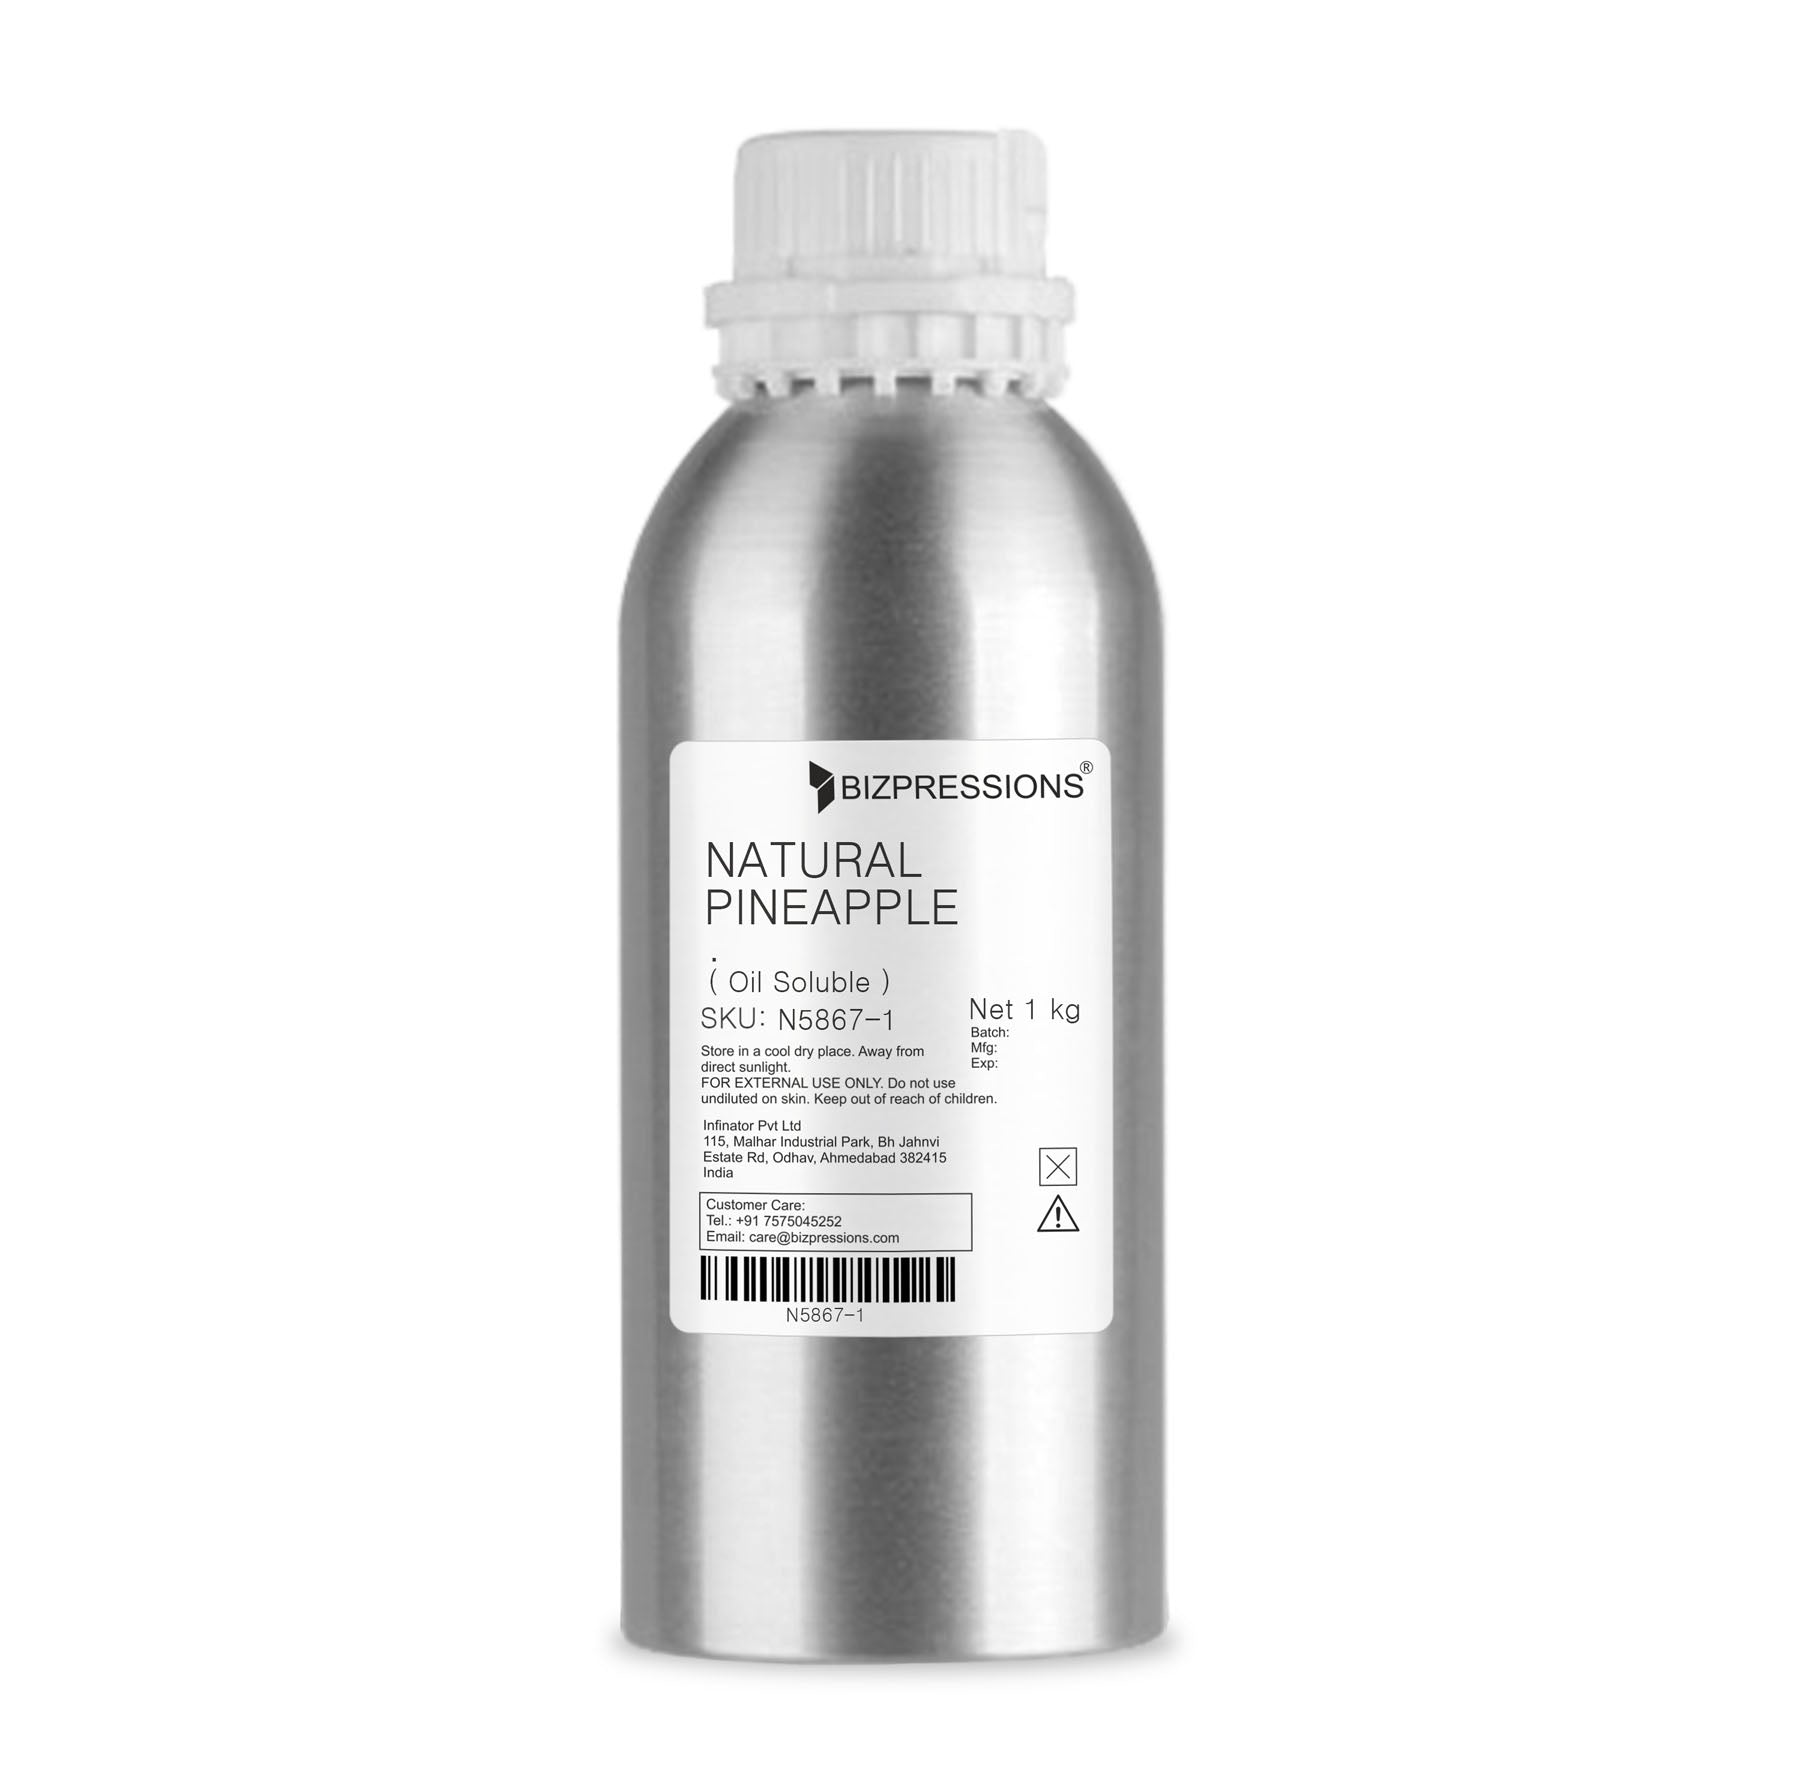 NATURAL PINEAPPLE - Fragrance ( Oil Soluble ) - 1 kg